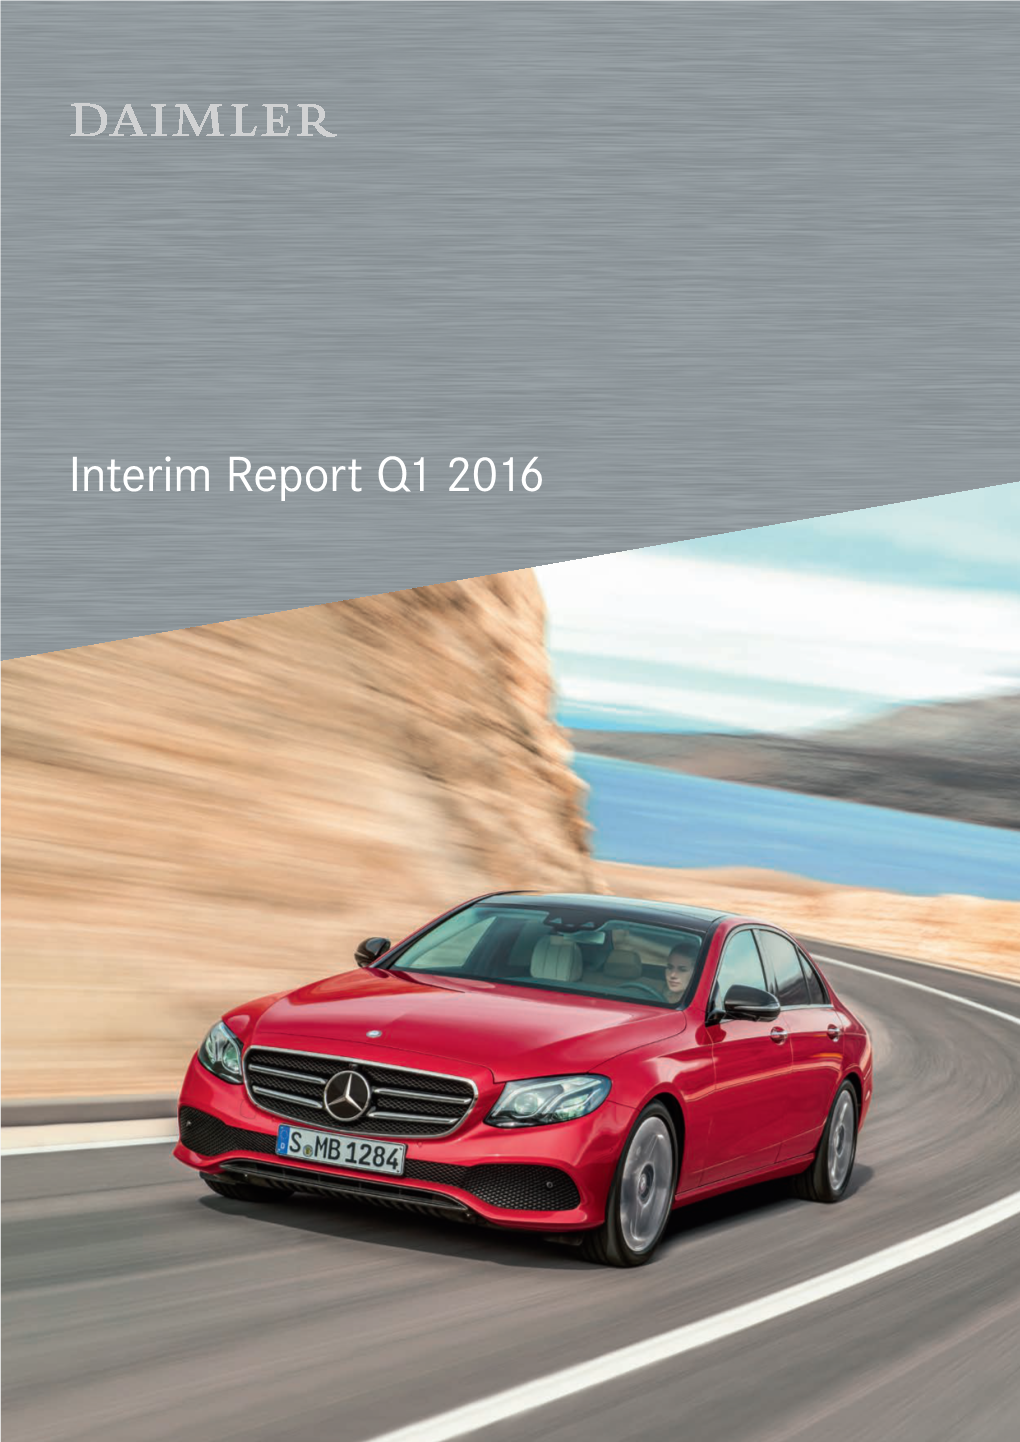 Daimler Interim Report Q1 2016